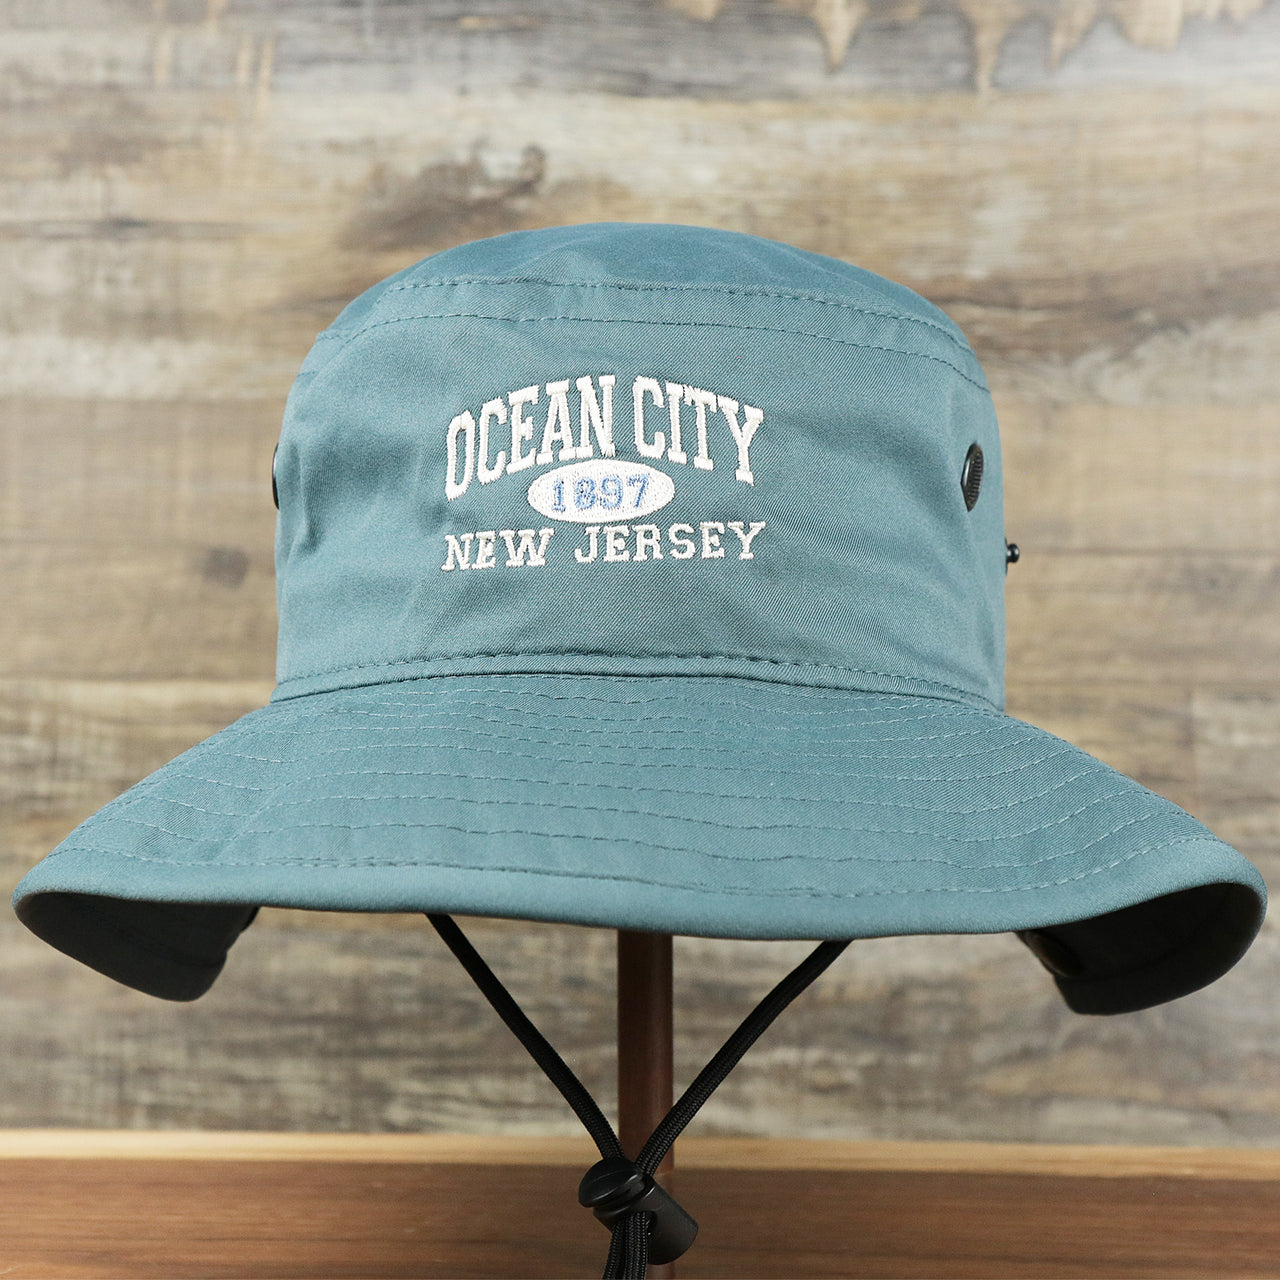 The Ocean City New Jersey 1897 Bucket Hat | Blue Steel Bucket Hat